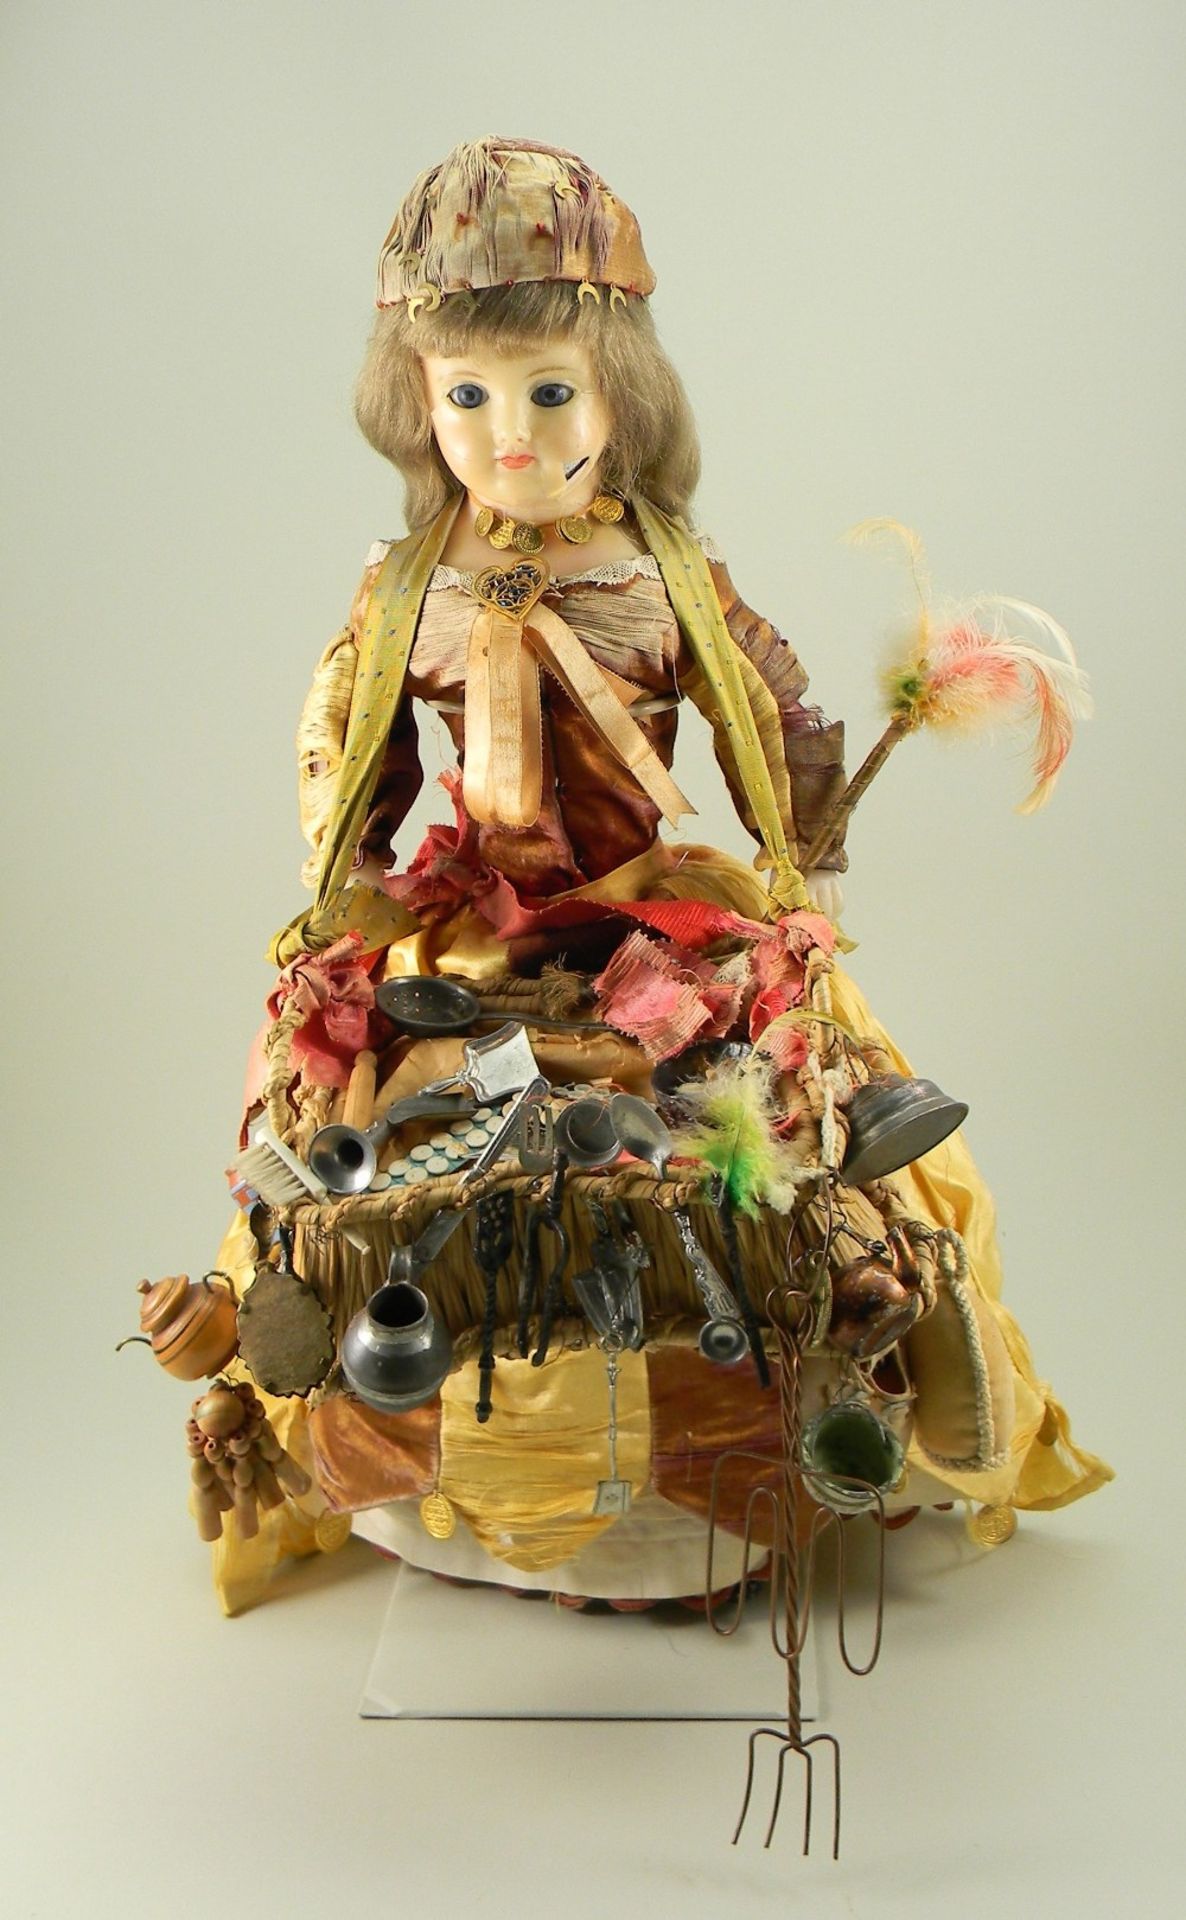 Wax over composition pedlar doll, German circa 1900,